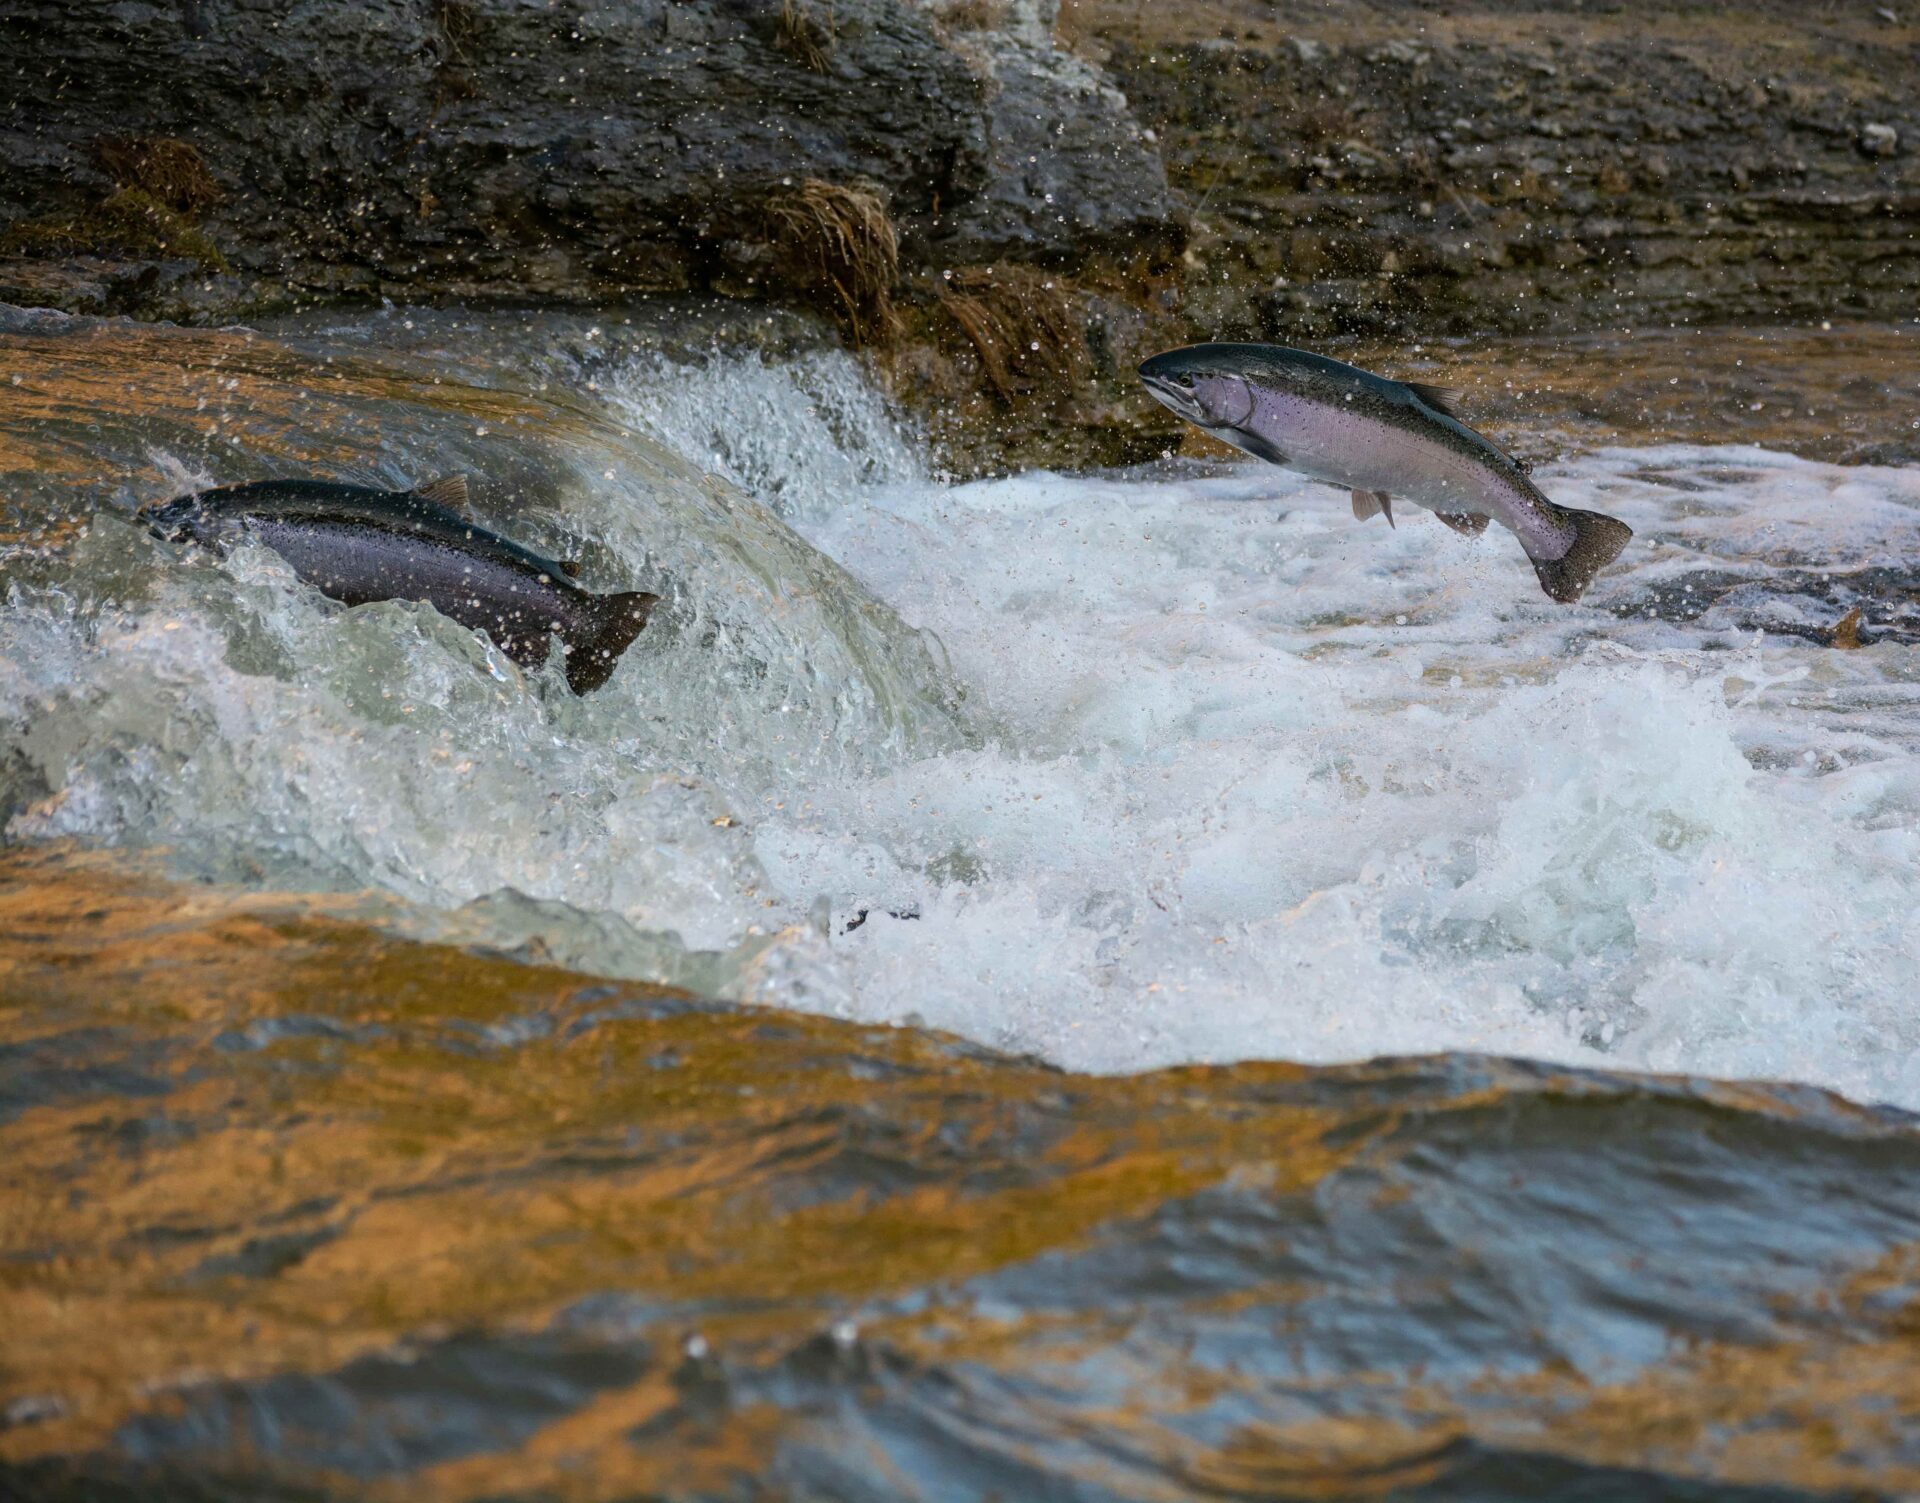 Two salmon fish swimming upstream